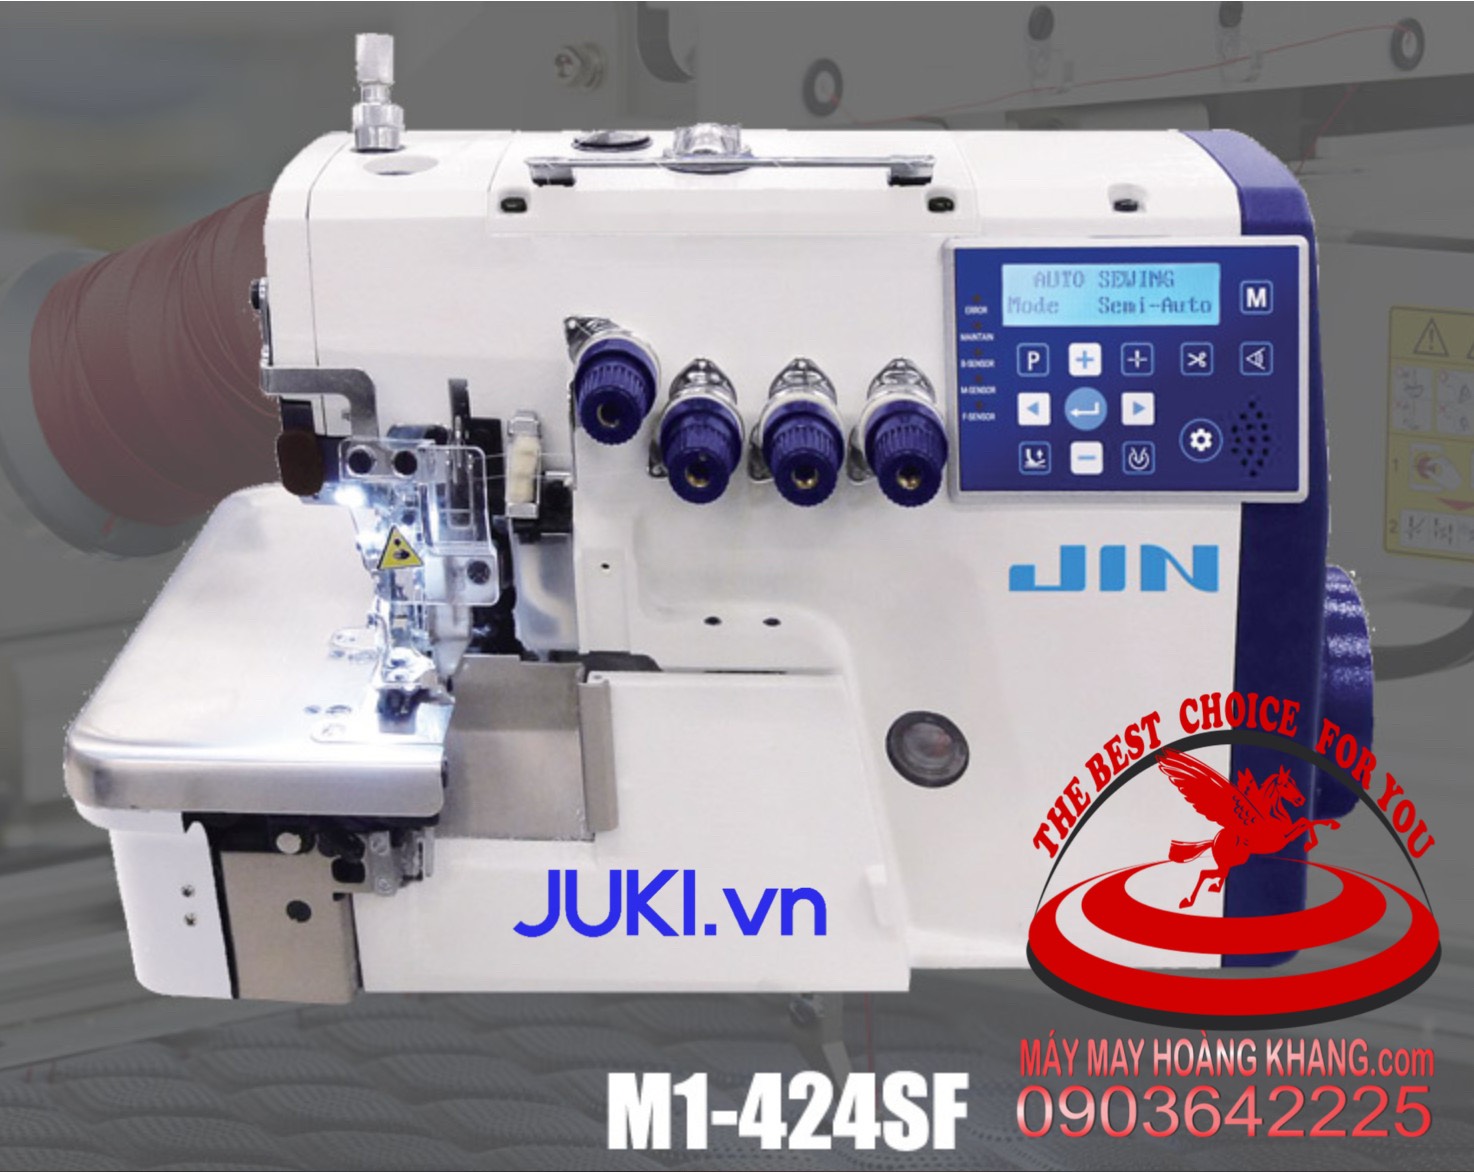 JIN M1-424SF Máy vắt sổ 2 kim 4 chỉ điện tử JUKI JIN M1-342SF  Auto Thread Trimmer, Direct-drive, High-speed, Overlock Machine (2 Needle 4 Thread)